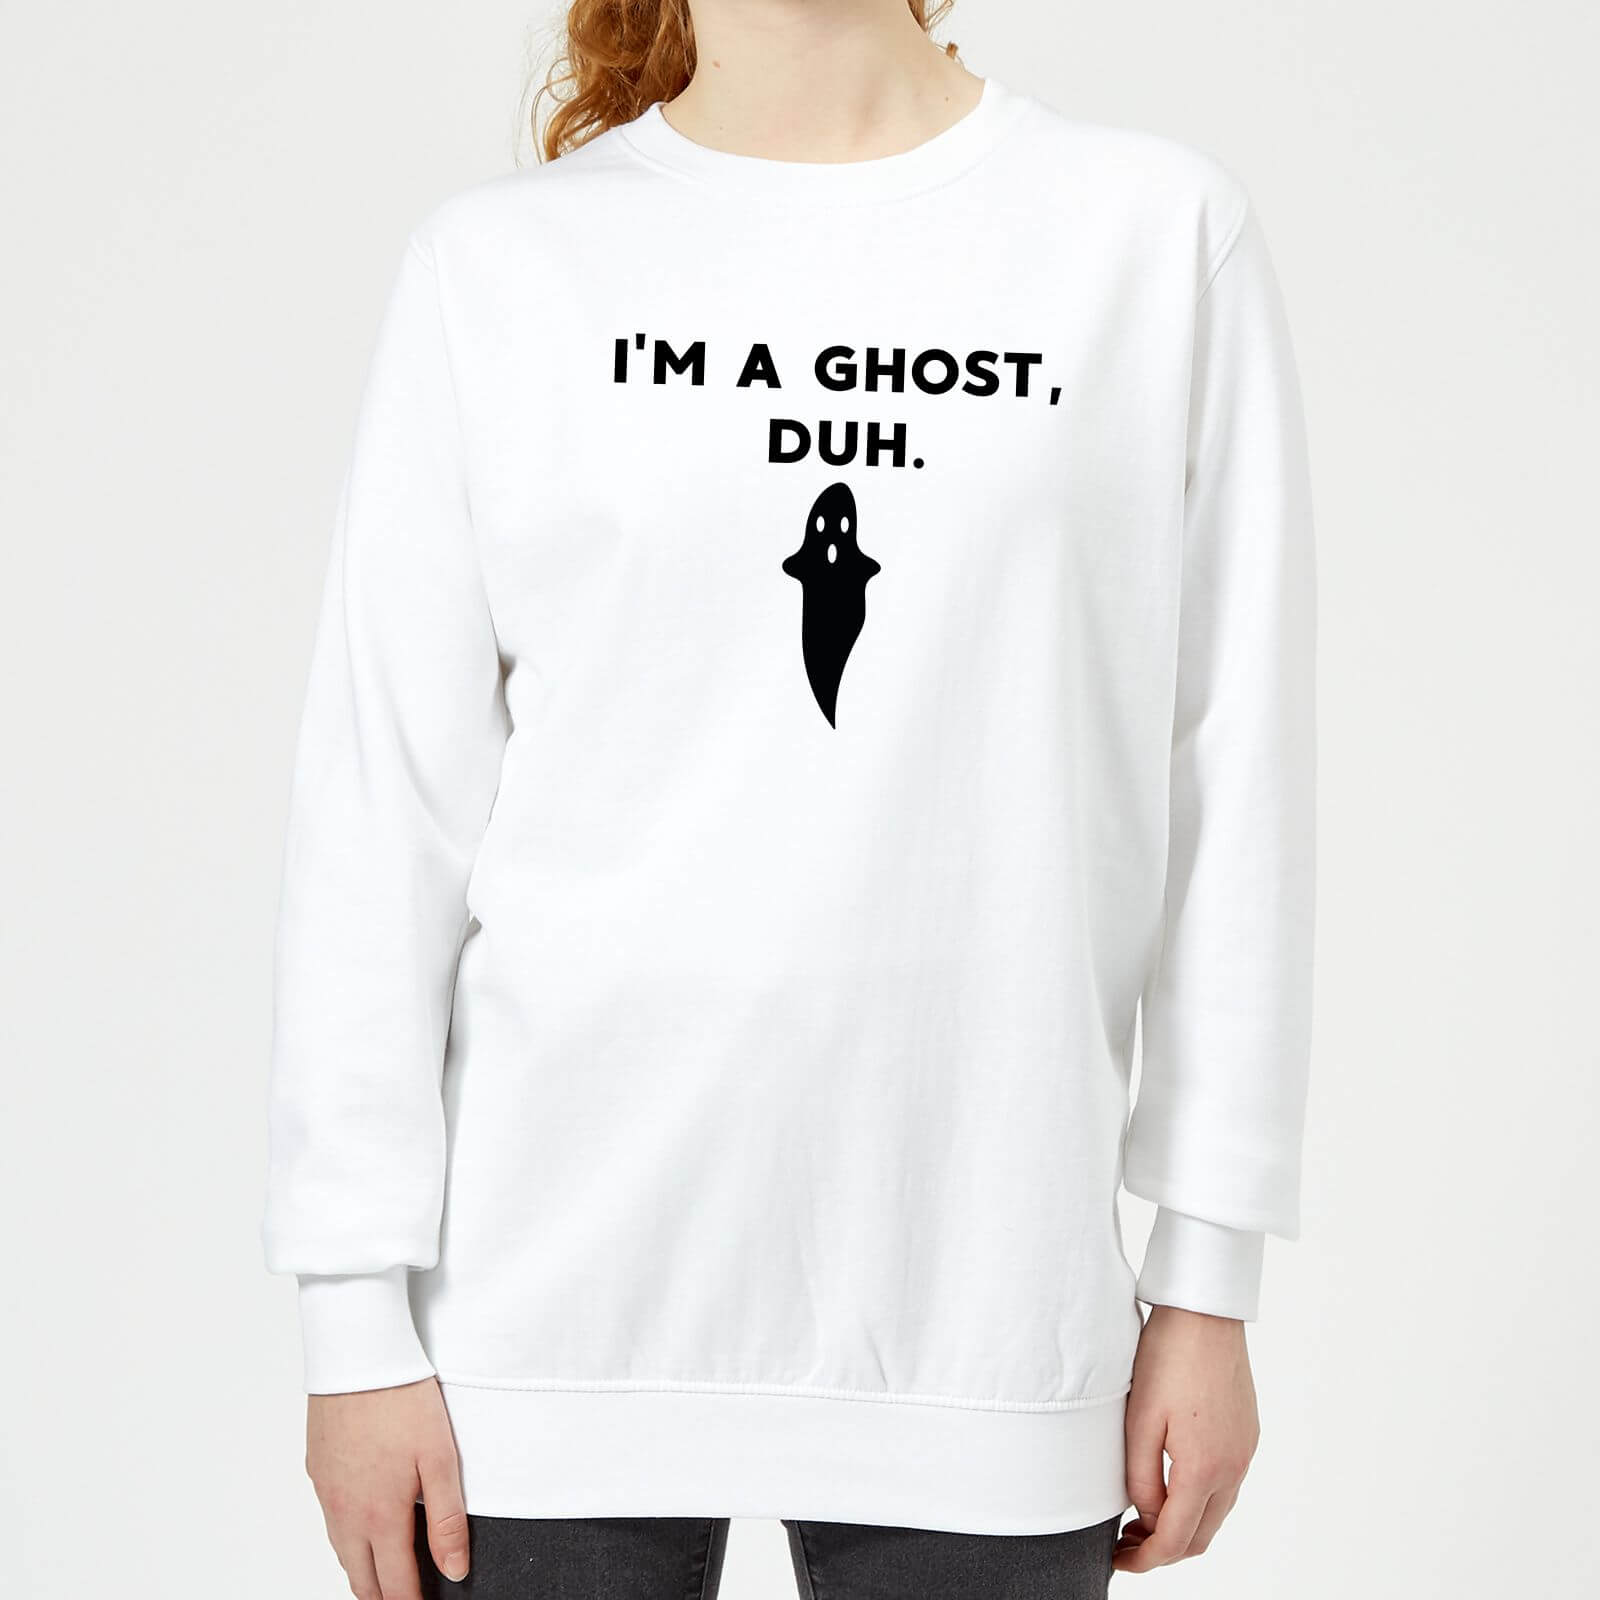 I'm A Ghost, Duh. Women's Sweatshirt - White - XL - White